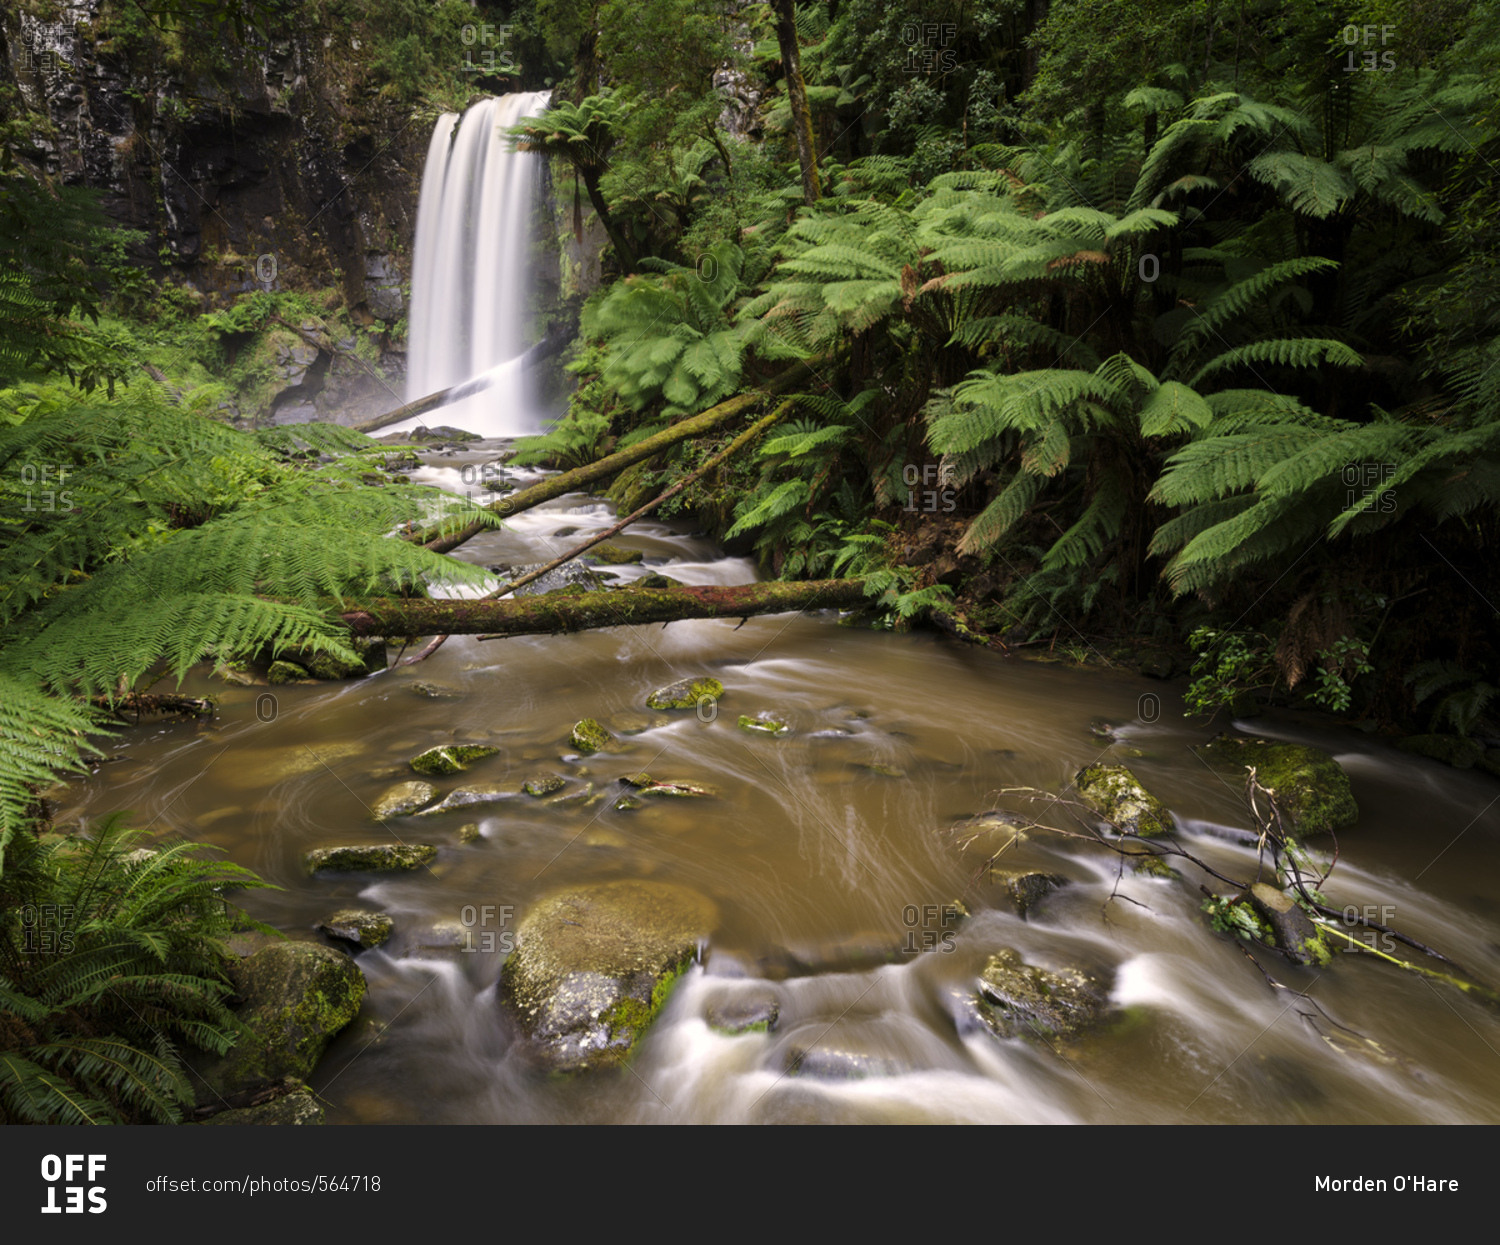 Hopetown Falls in the Great Otway National Park, Australia